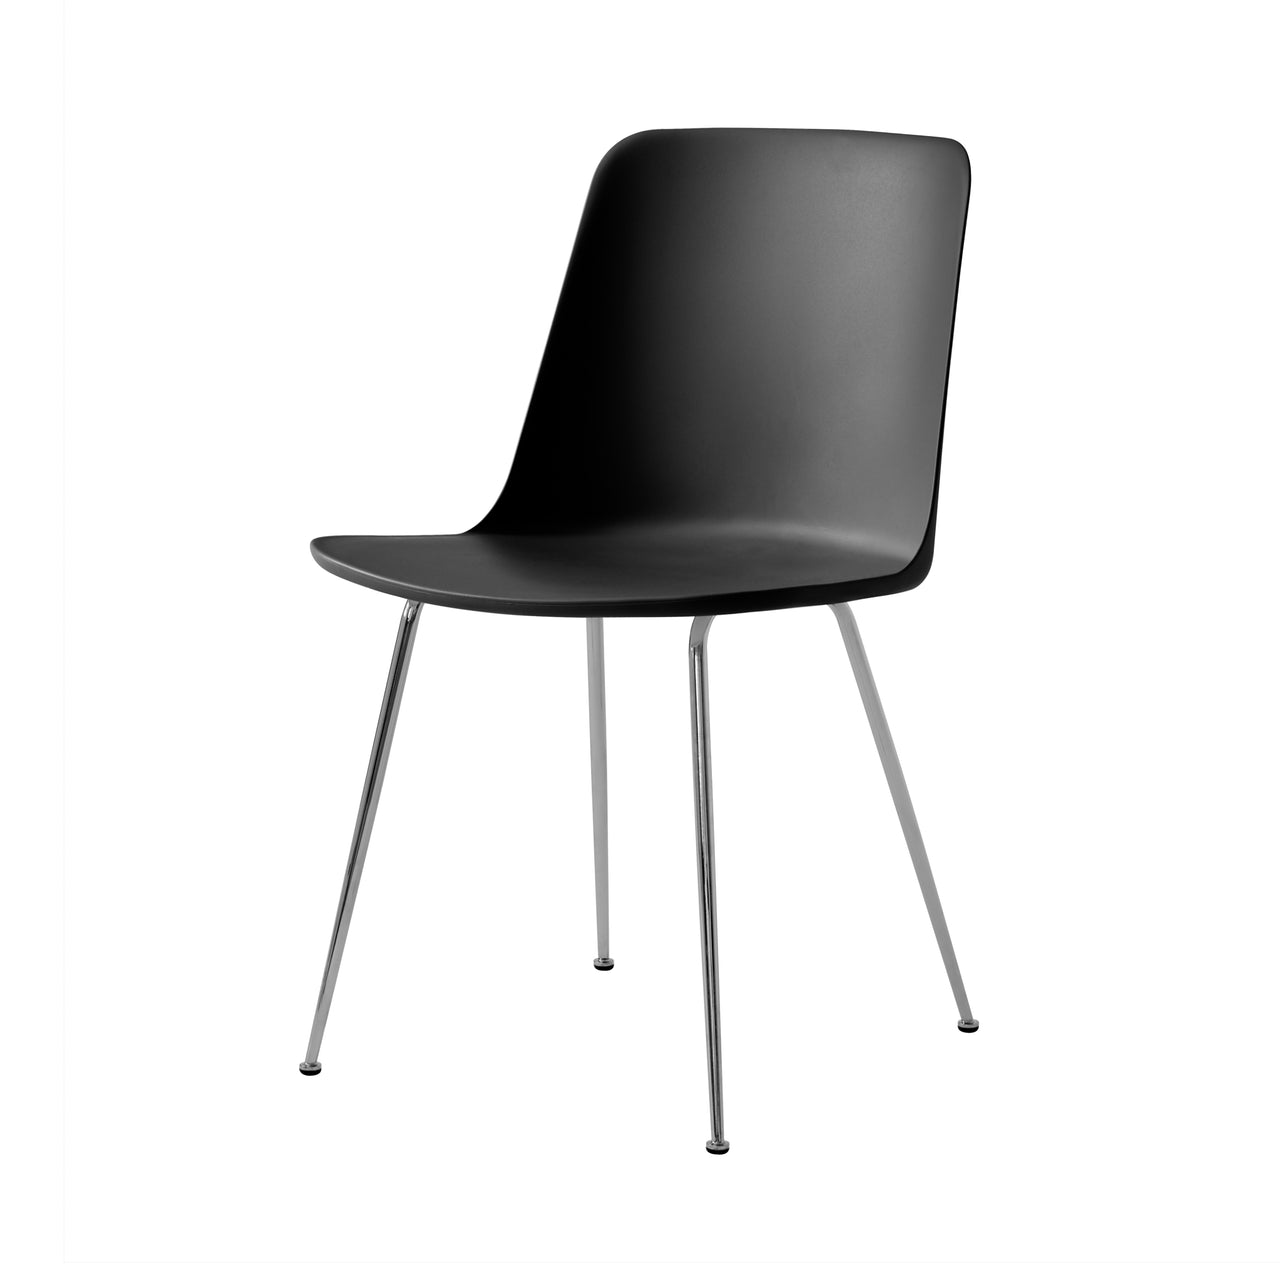 Rely Chair HW6: Black + Chrome